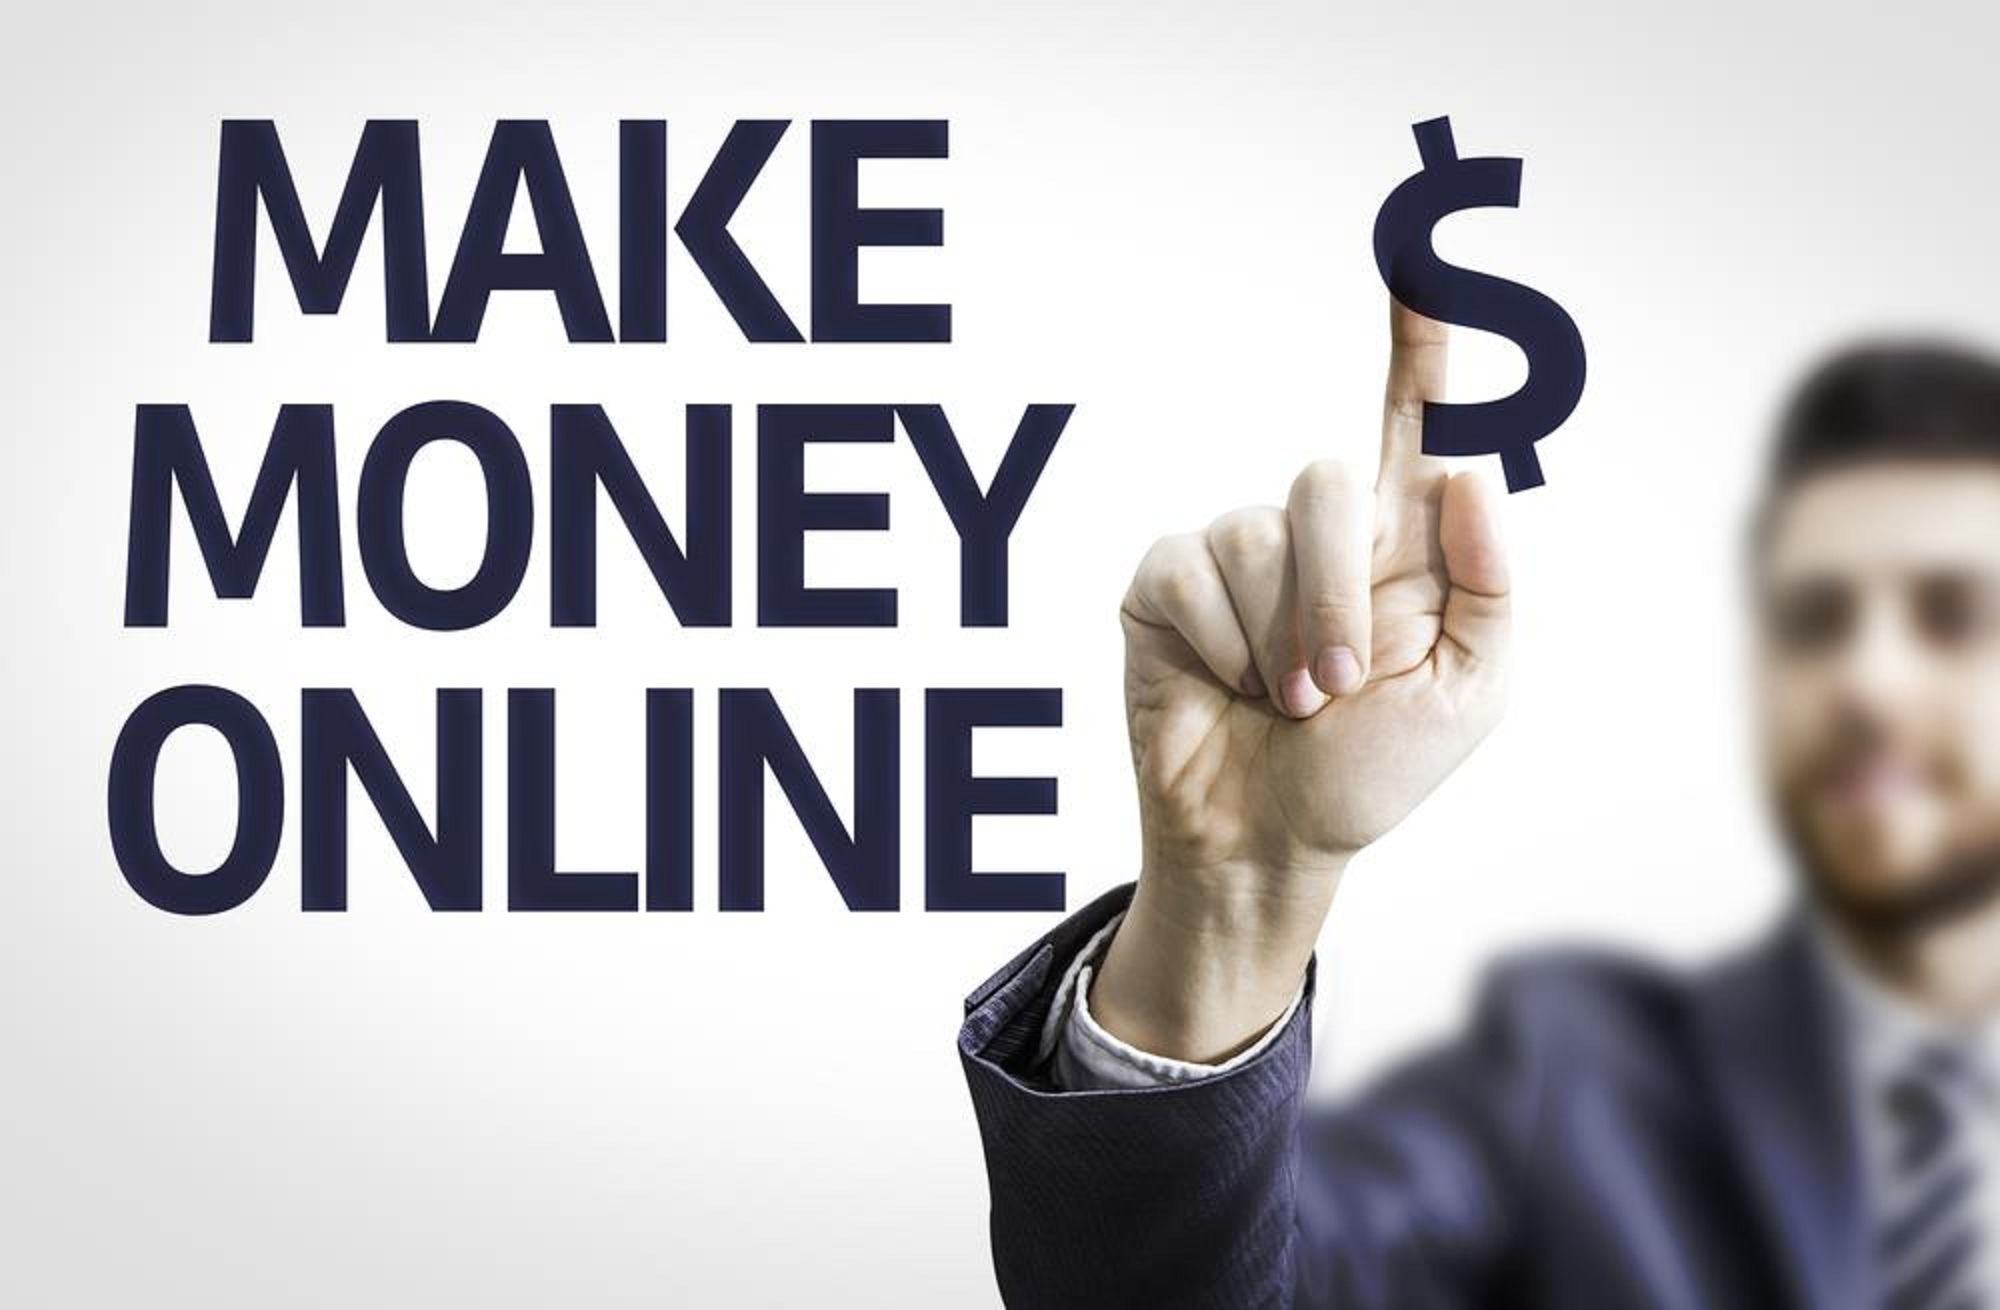 makey money online